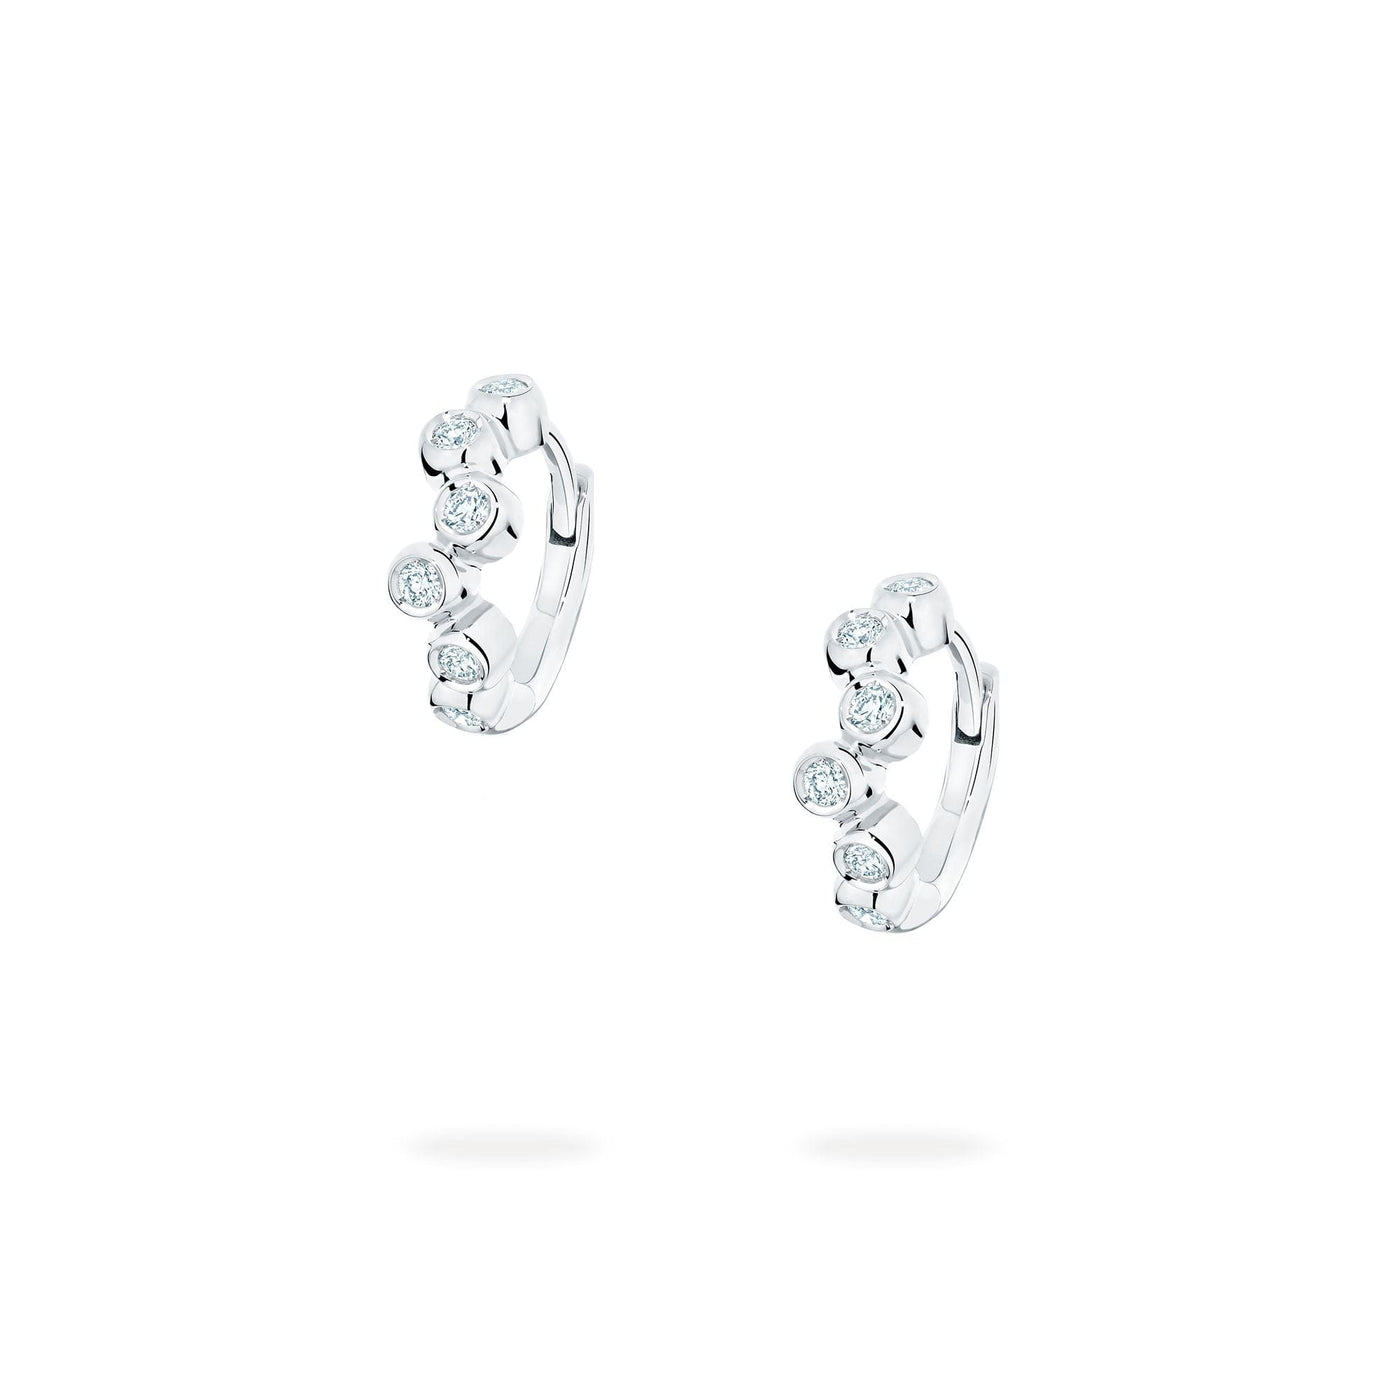 Birks 18K White Gold Birks Diamond Huggie Earrings Earrings